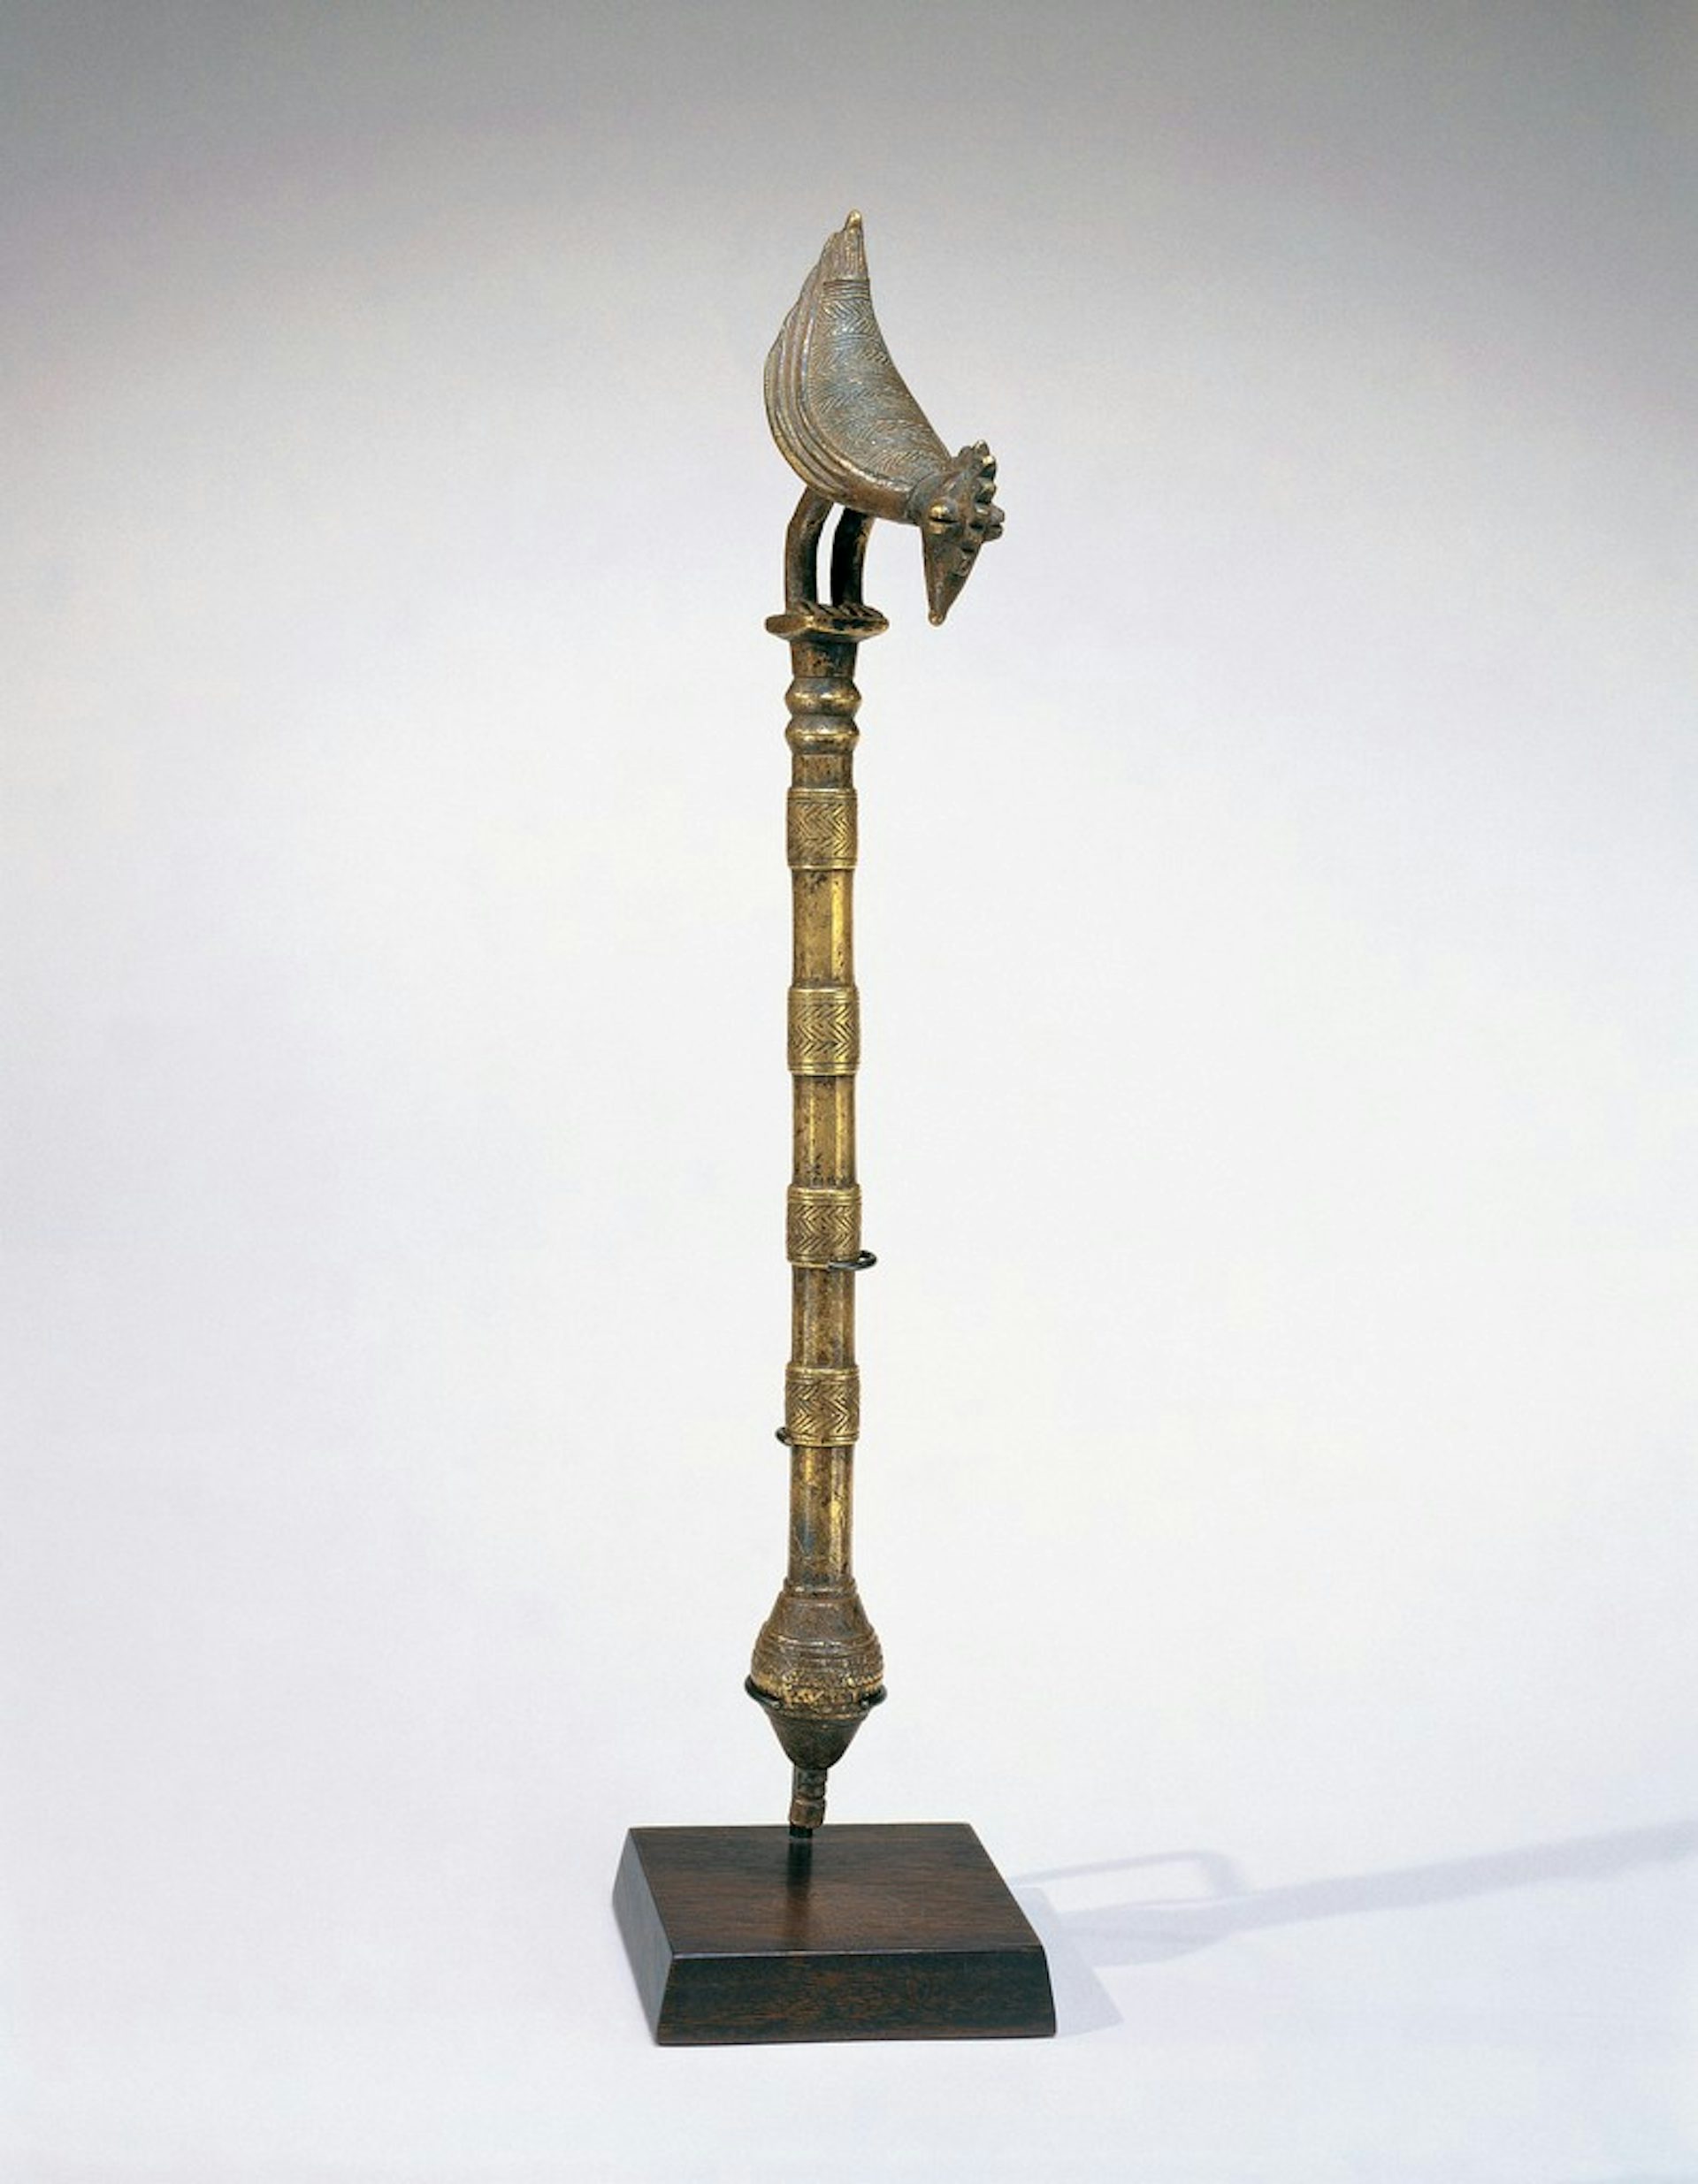 Scepter by Yoruba artist (late nineteenth–early twentieth century).